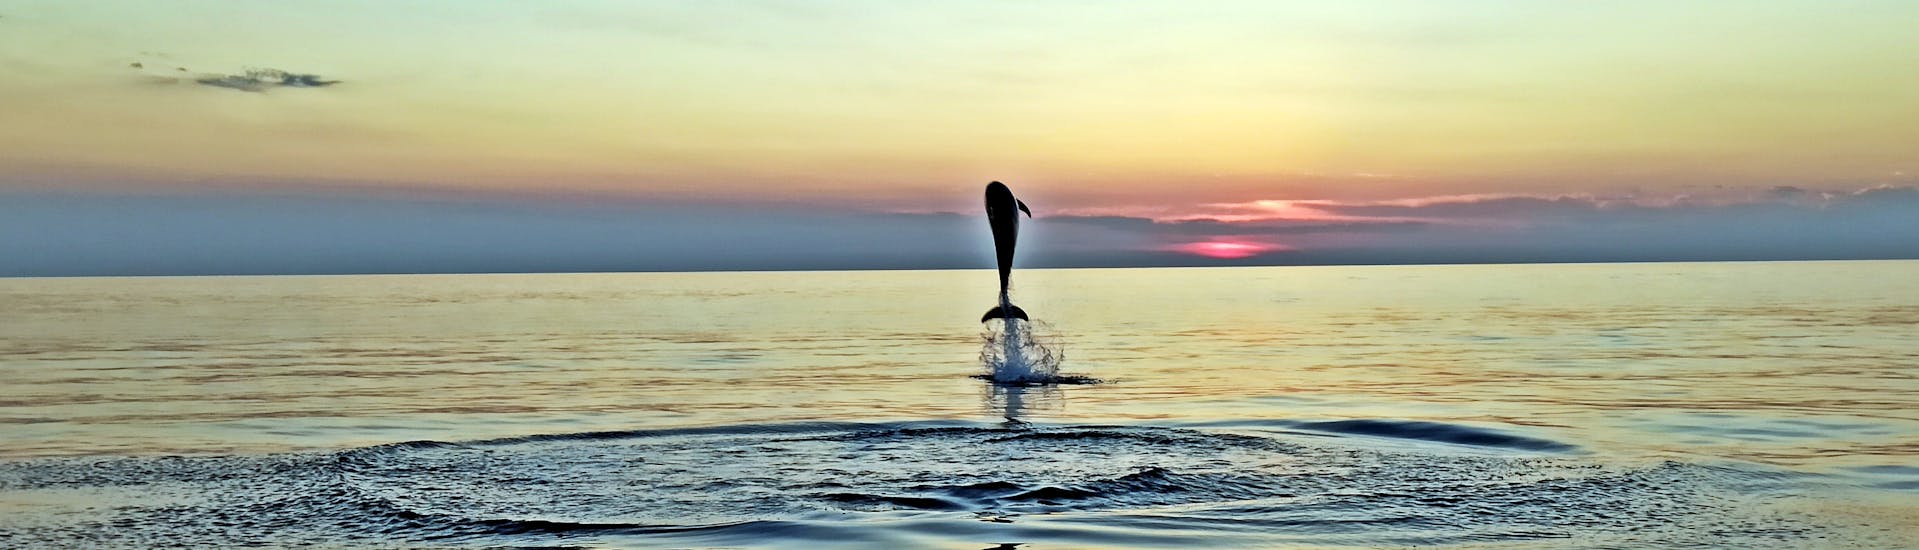 Bootstour bei Sonnenuntergang ab Rovinj mit Delfinbeobachtung.